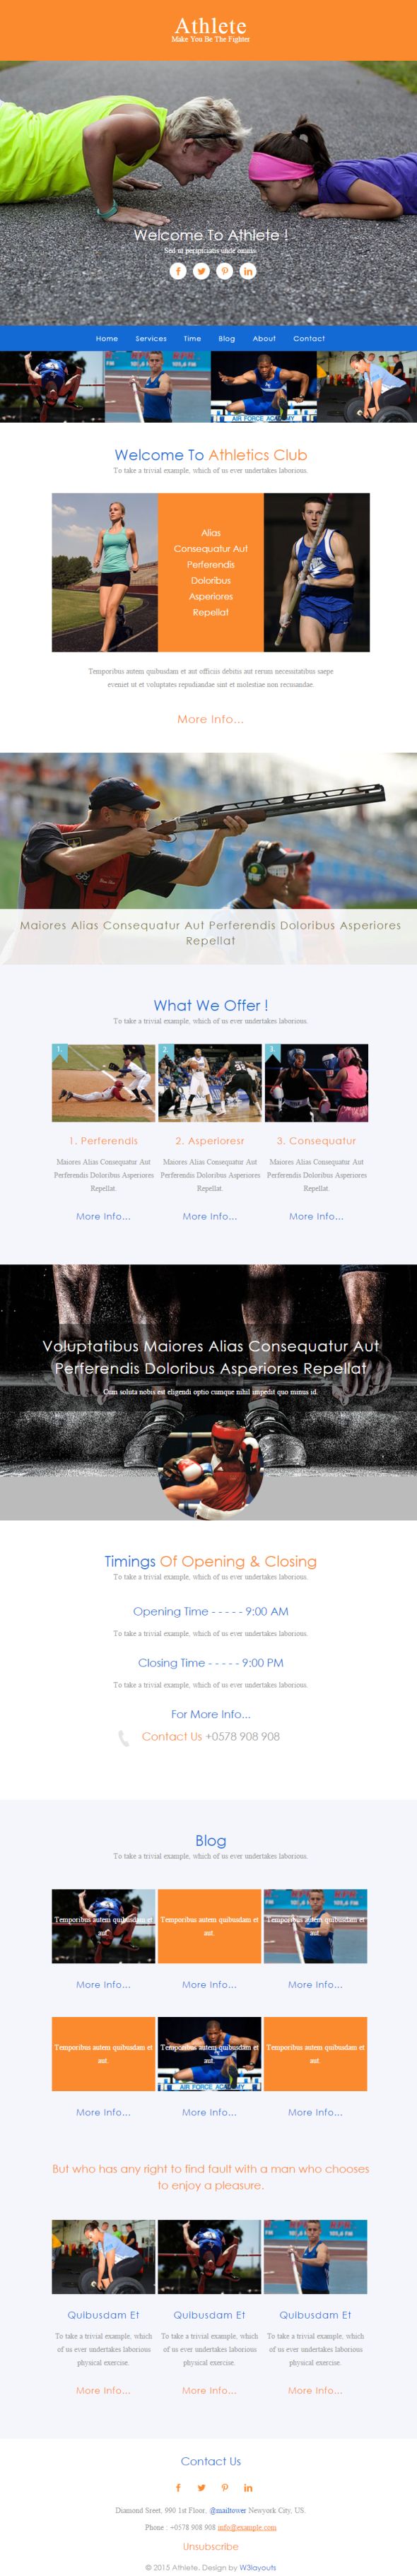 athlete-newsletter-template